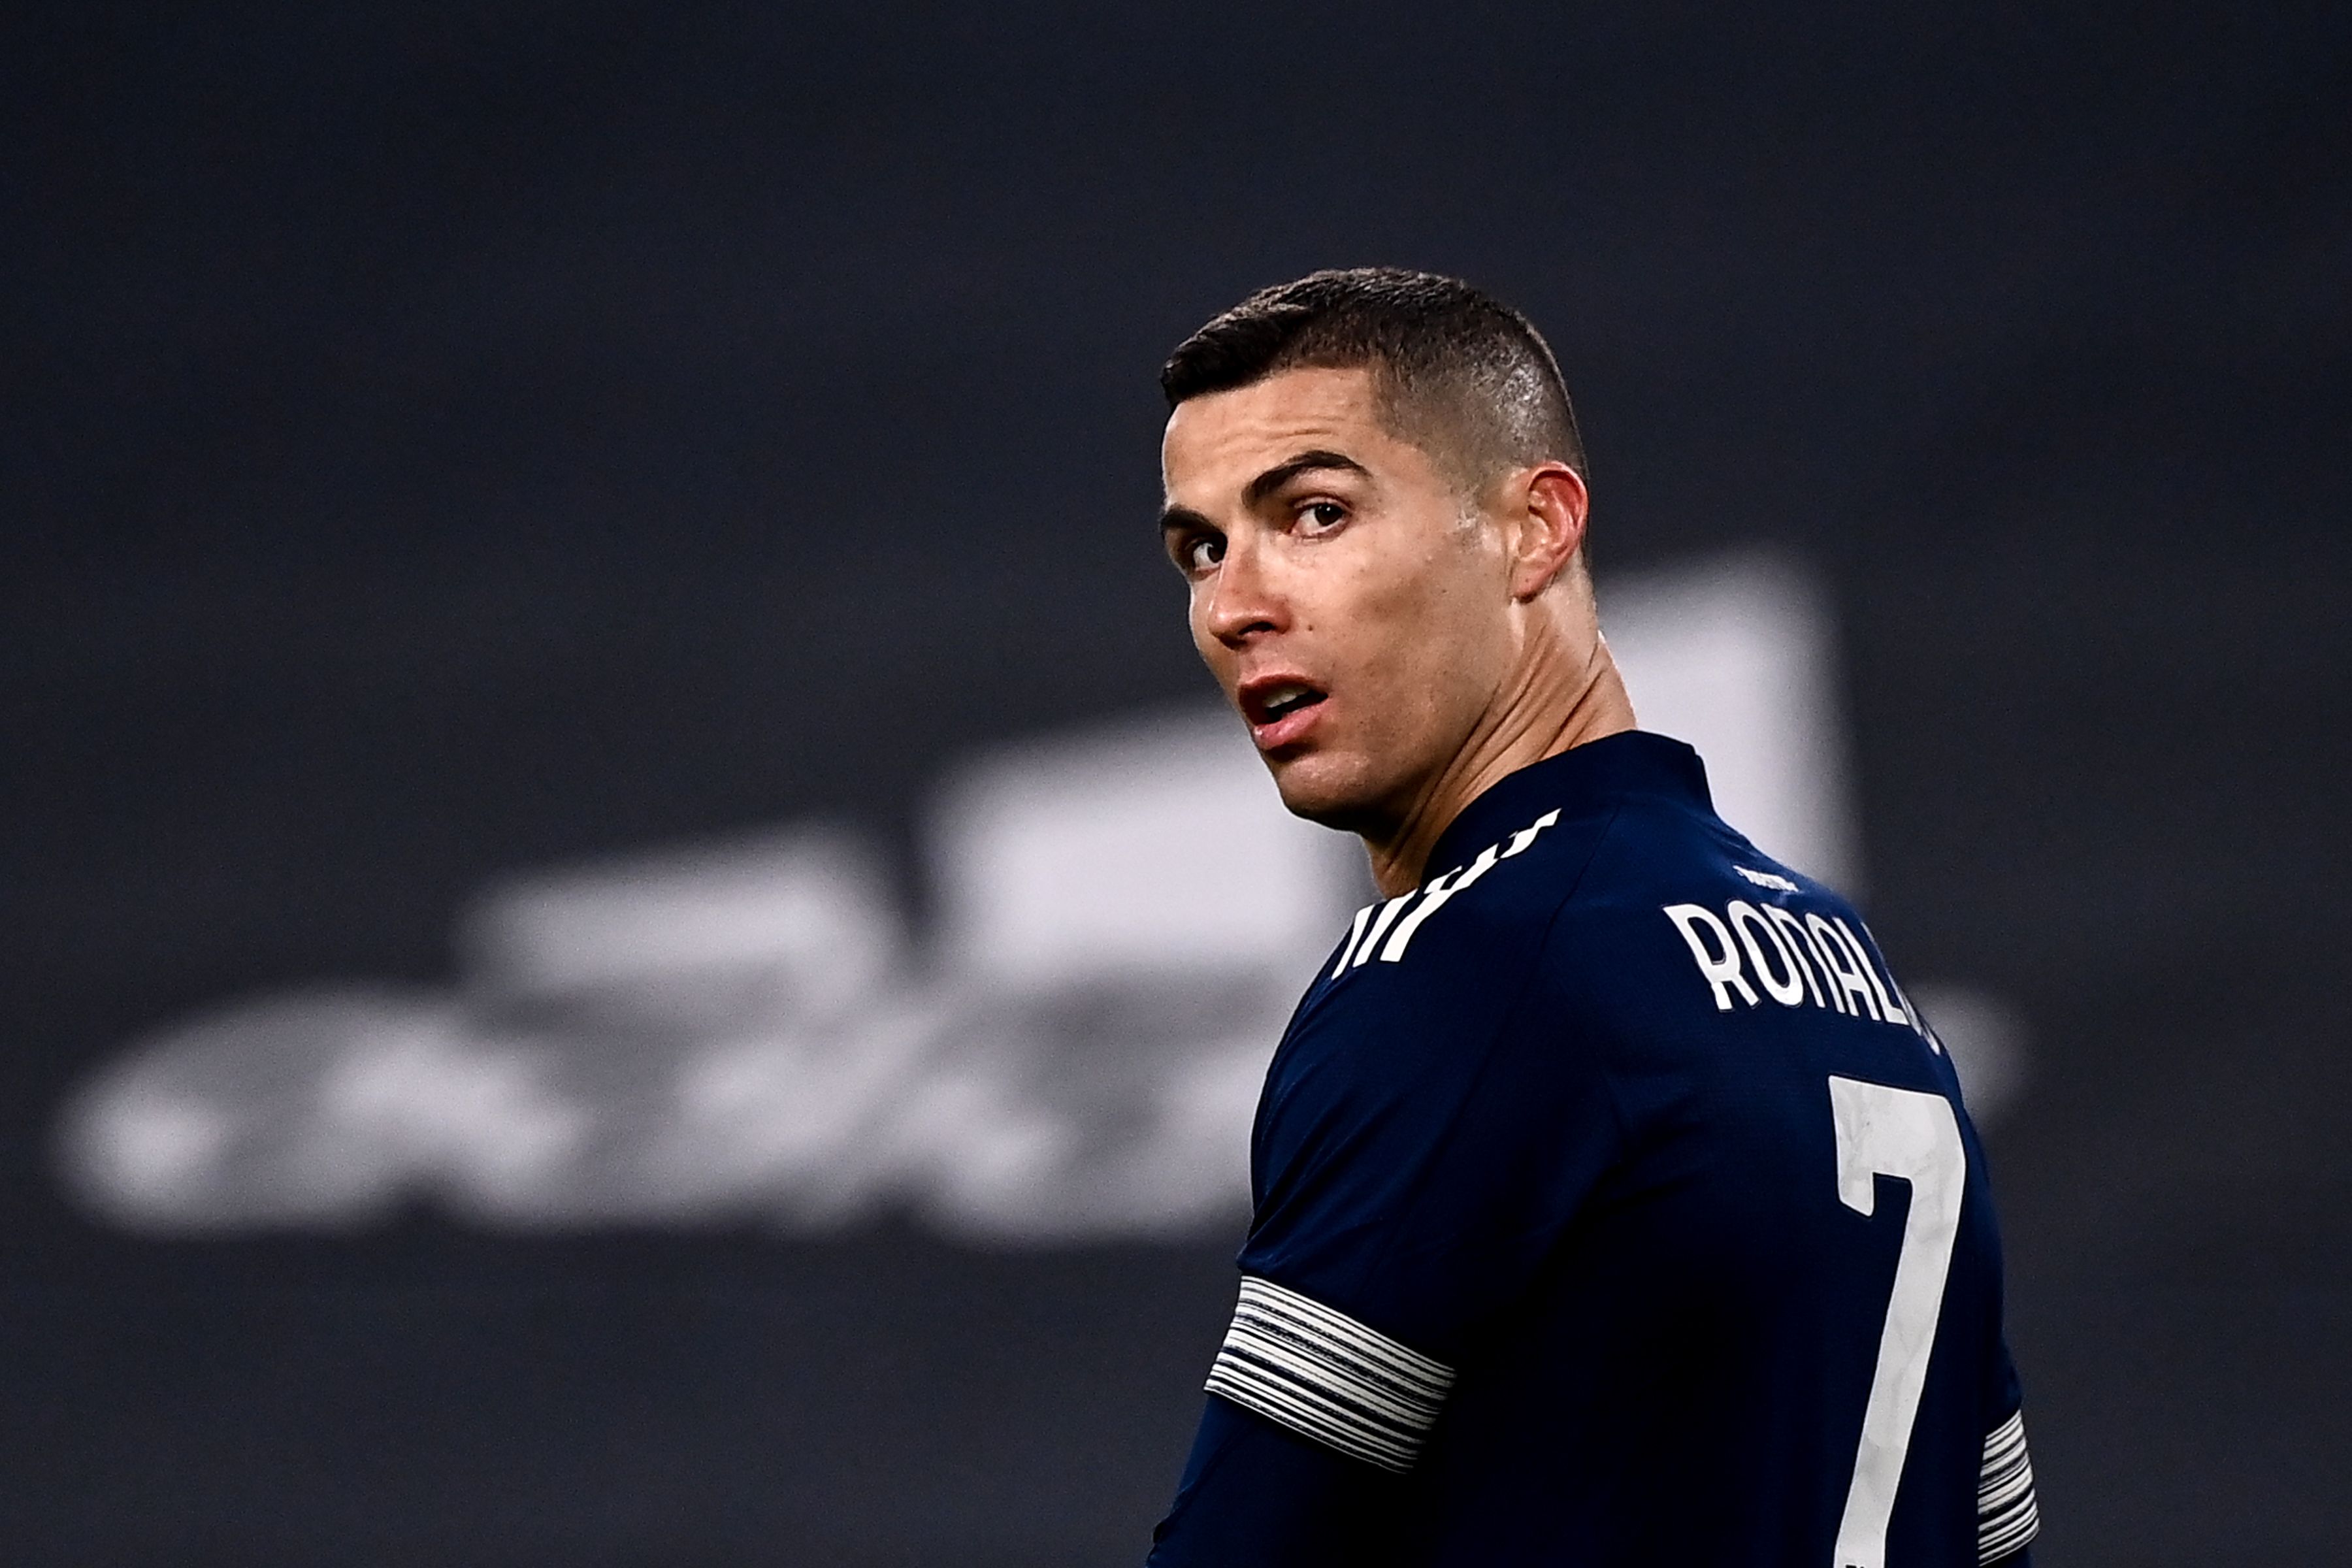 Cristiano Ronaldo lidera la tabla de goleo de la Serie A italiana, por arriba de otros artilleros como Lulaku e Ibrahimovic. (Foto Prensa Libre: AFP)